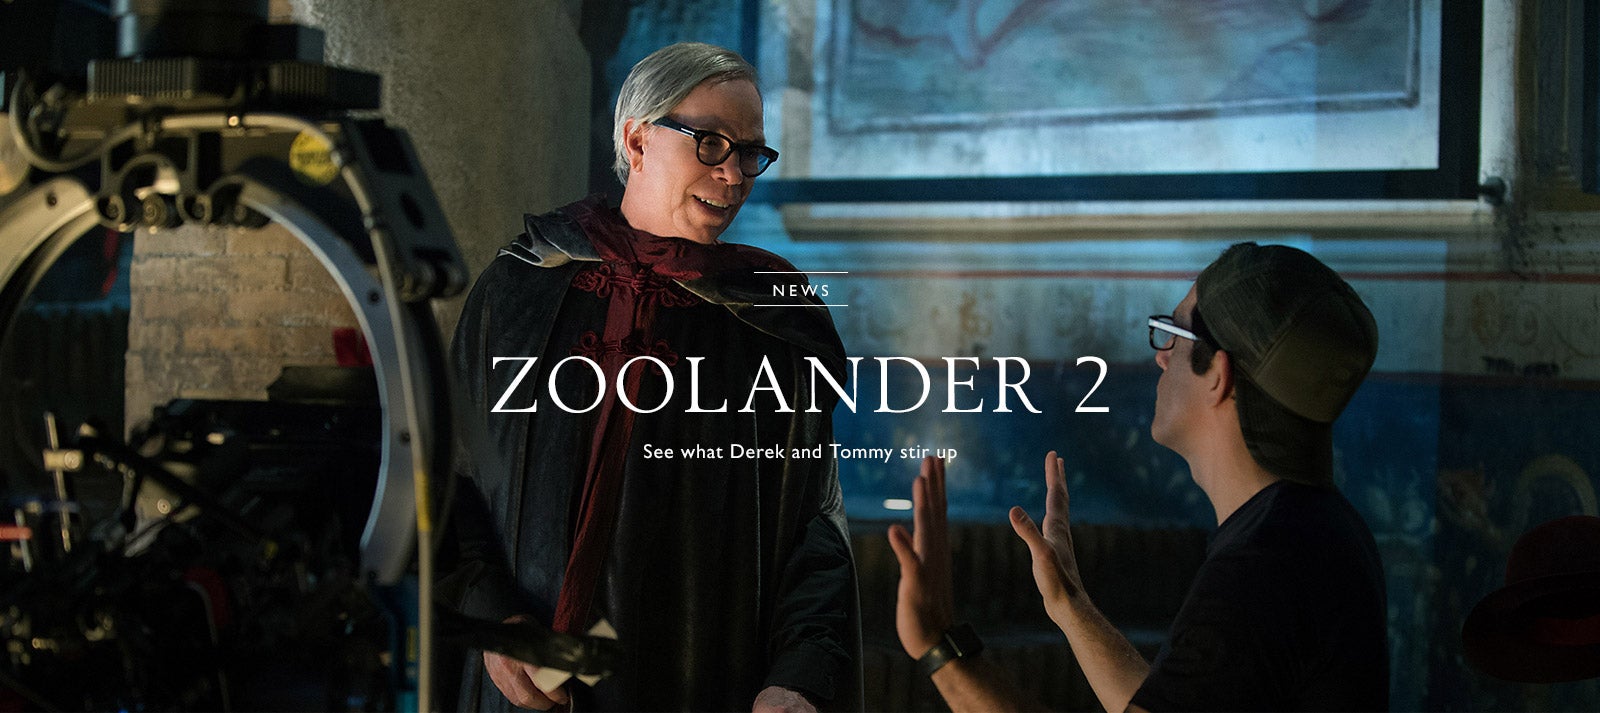 Zoolander 2 Full Movie Online Free - mirardesi